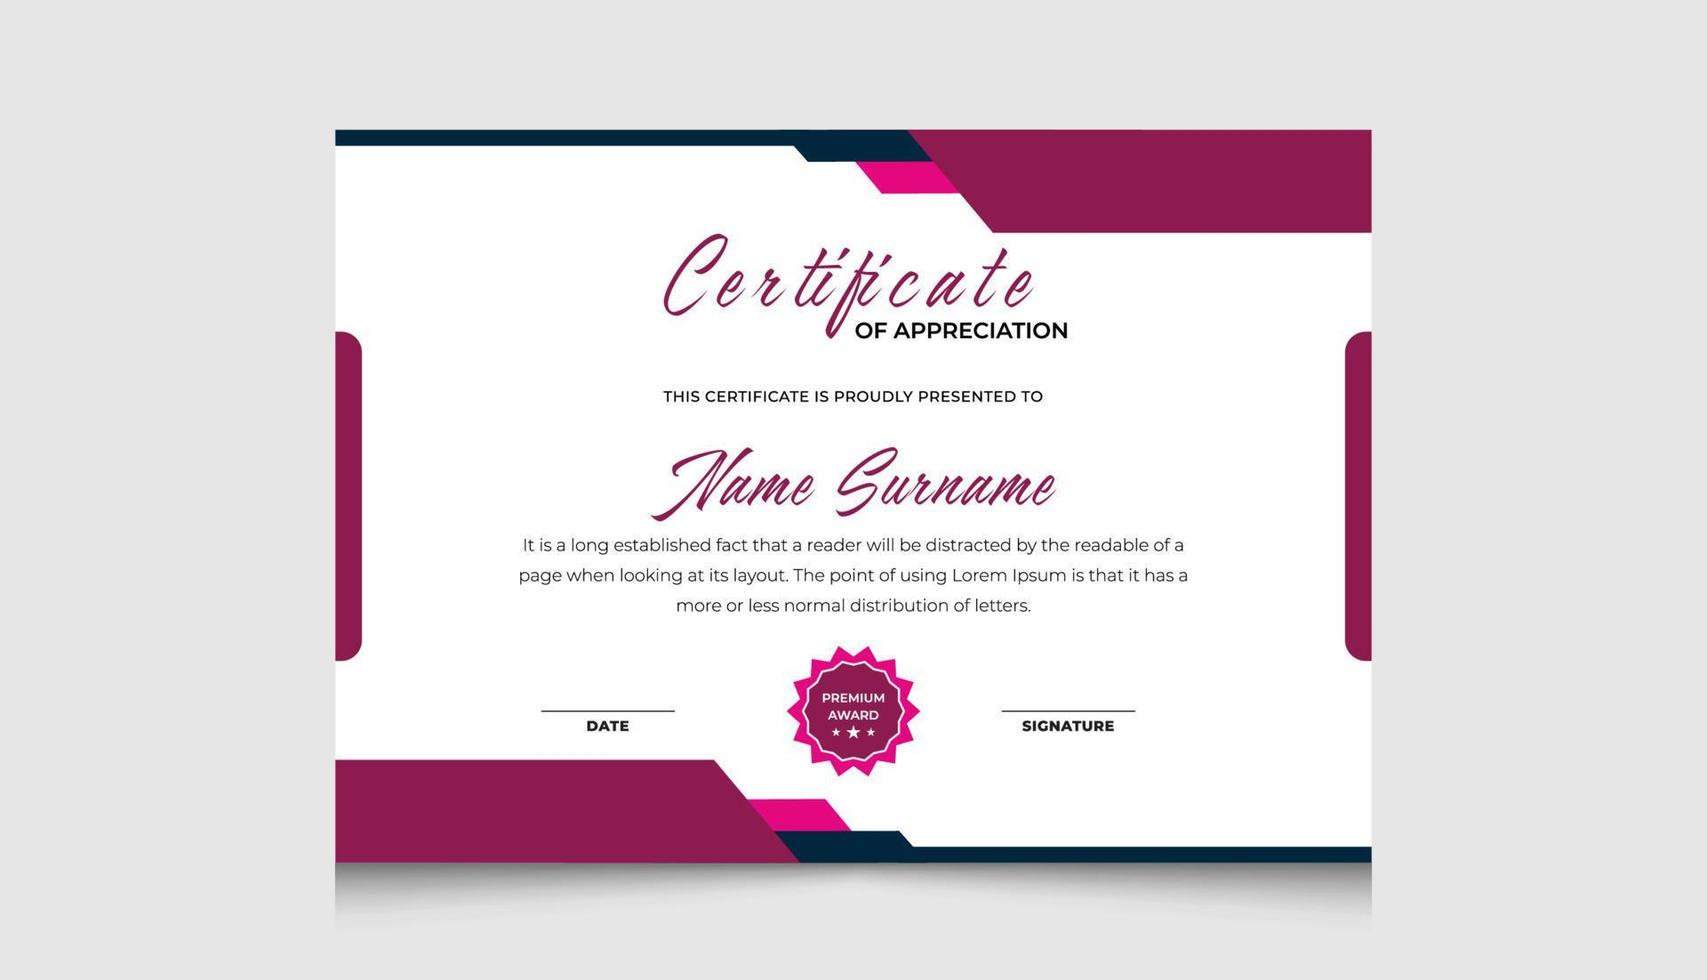 Clean modern certificate template, Appreciation and Achievement Certificate Vector Template, Diploma background certificate design.